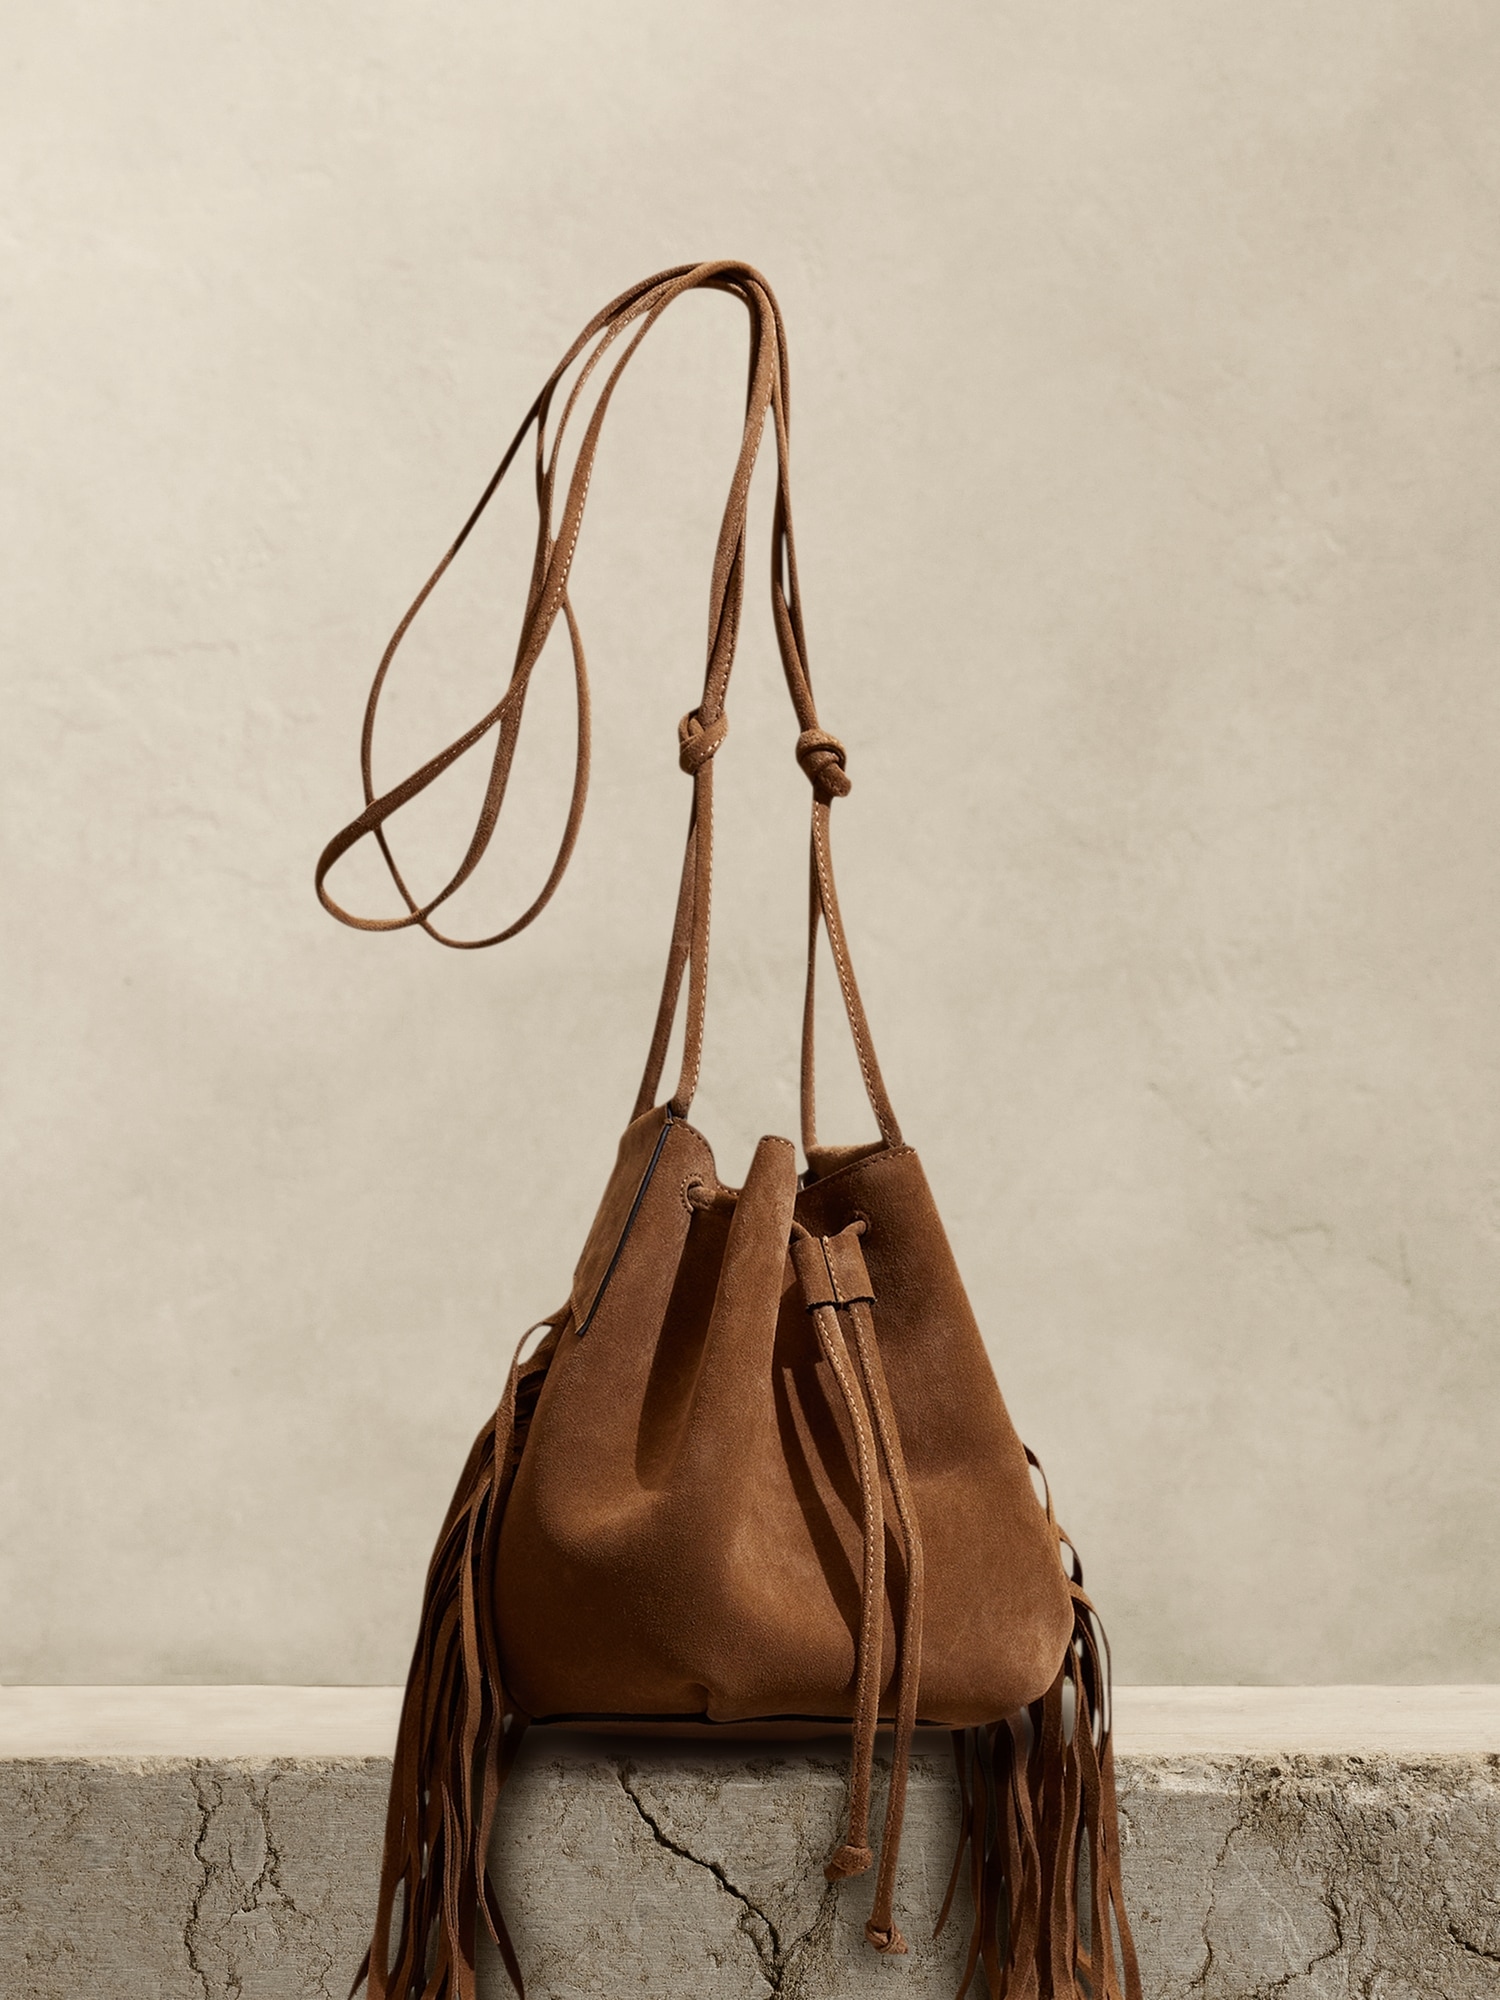 BANANA REPUBLIC WHITE Leather Hobo Purse Shoulder Bag $35.00 - PicClick